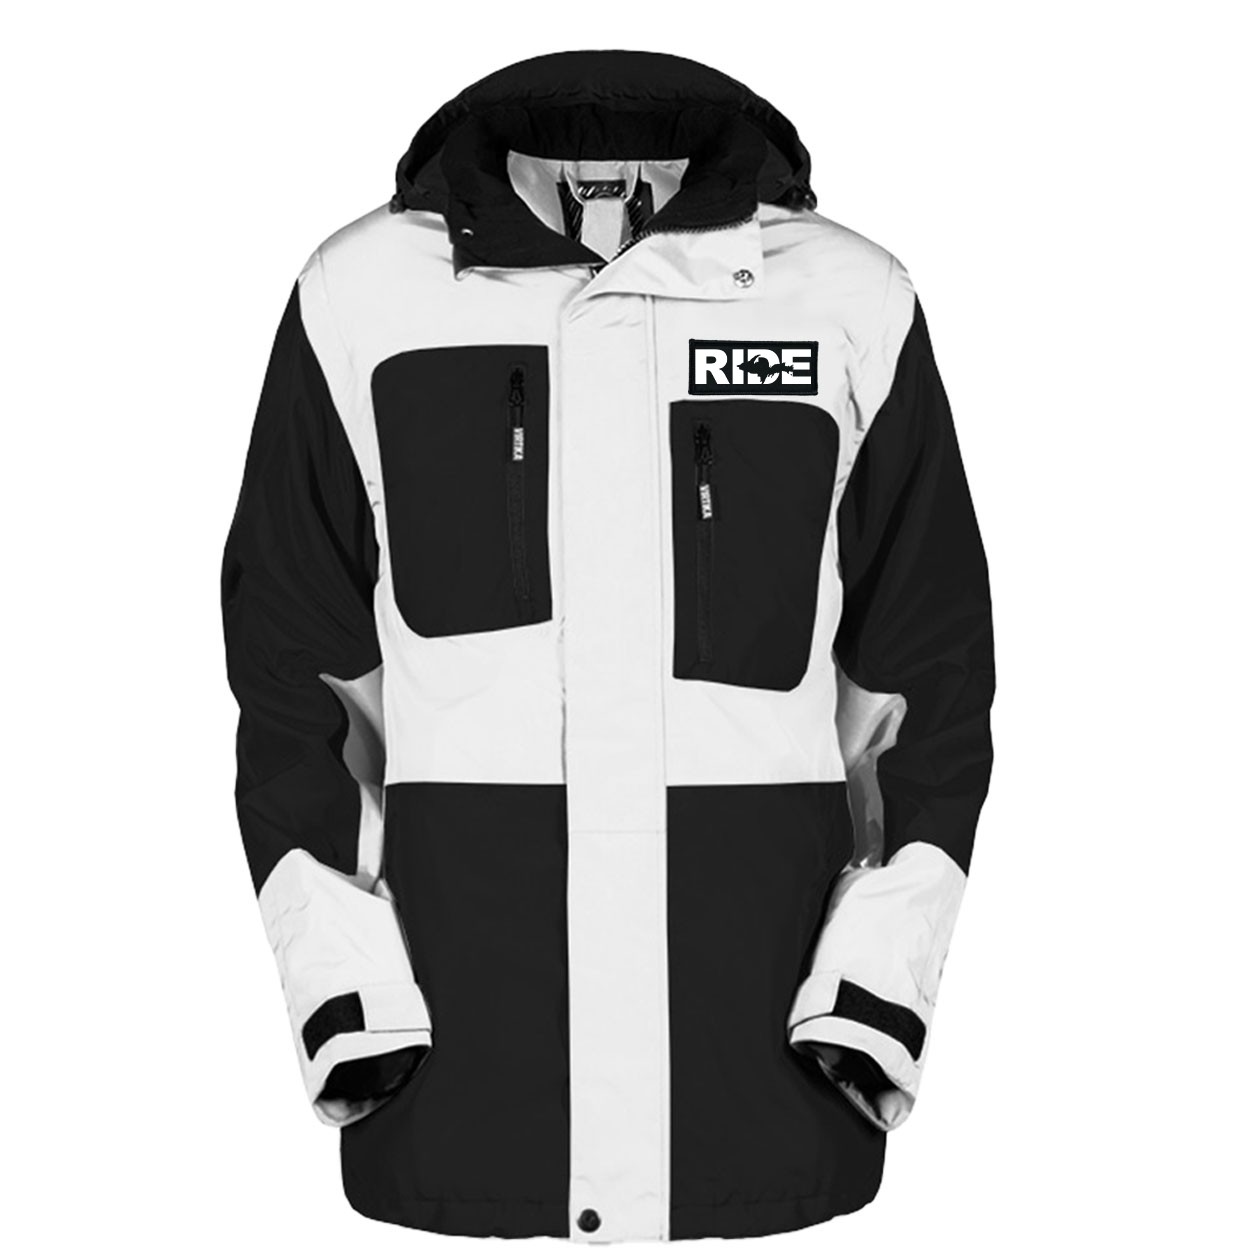 Ride Michigan UP Pro Waterproof Breathable Winter Virtika Jacket Black/White (White Logo)